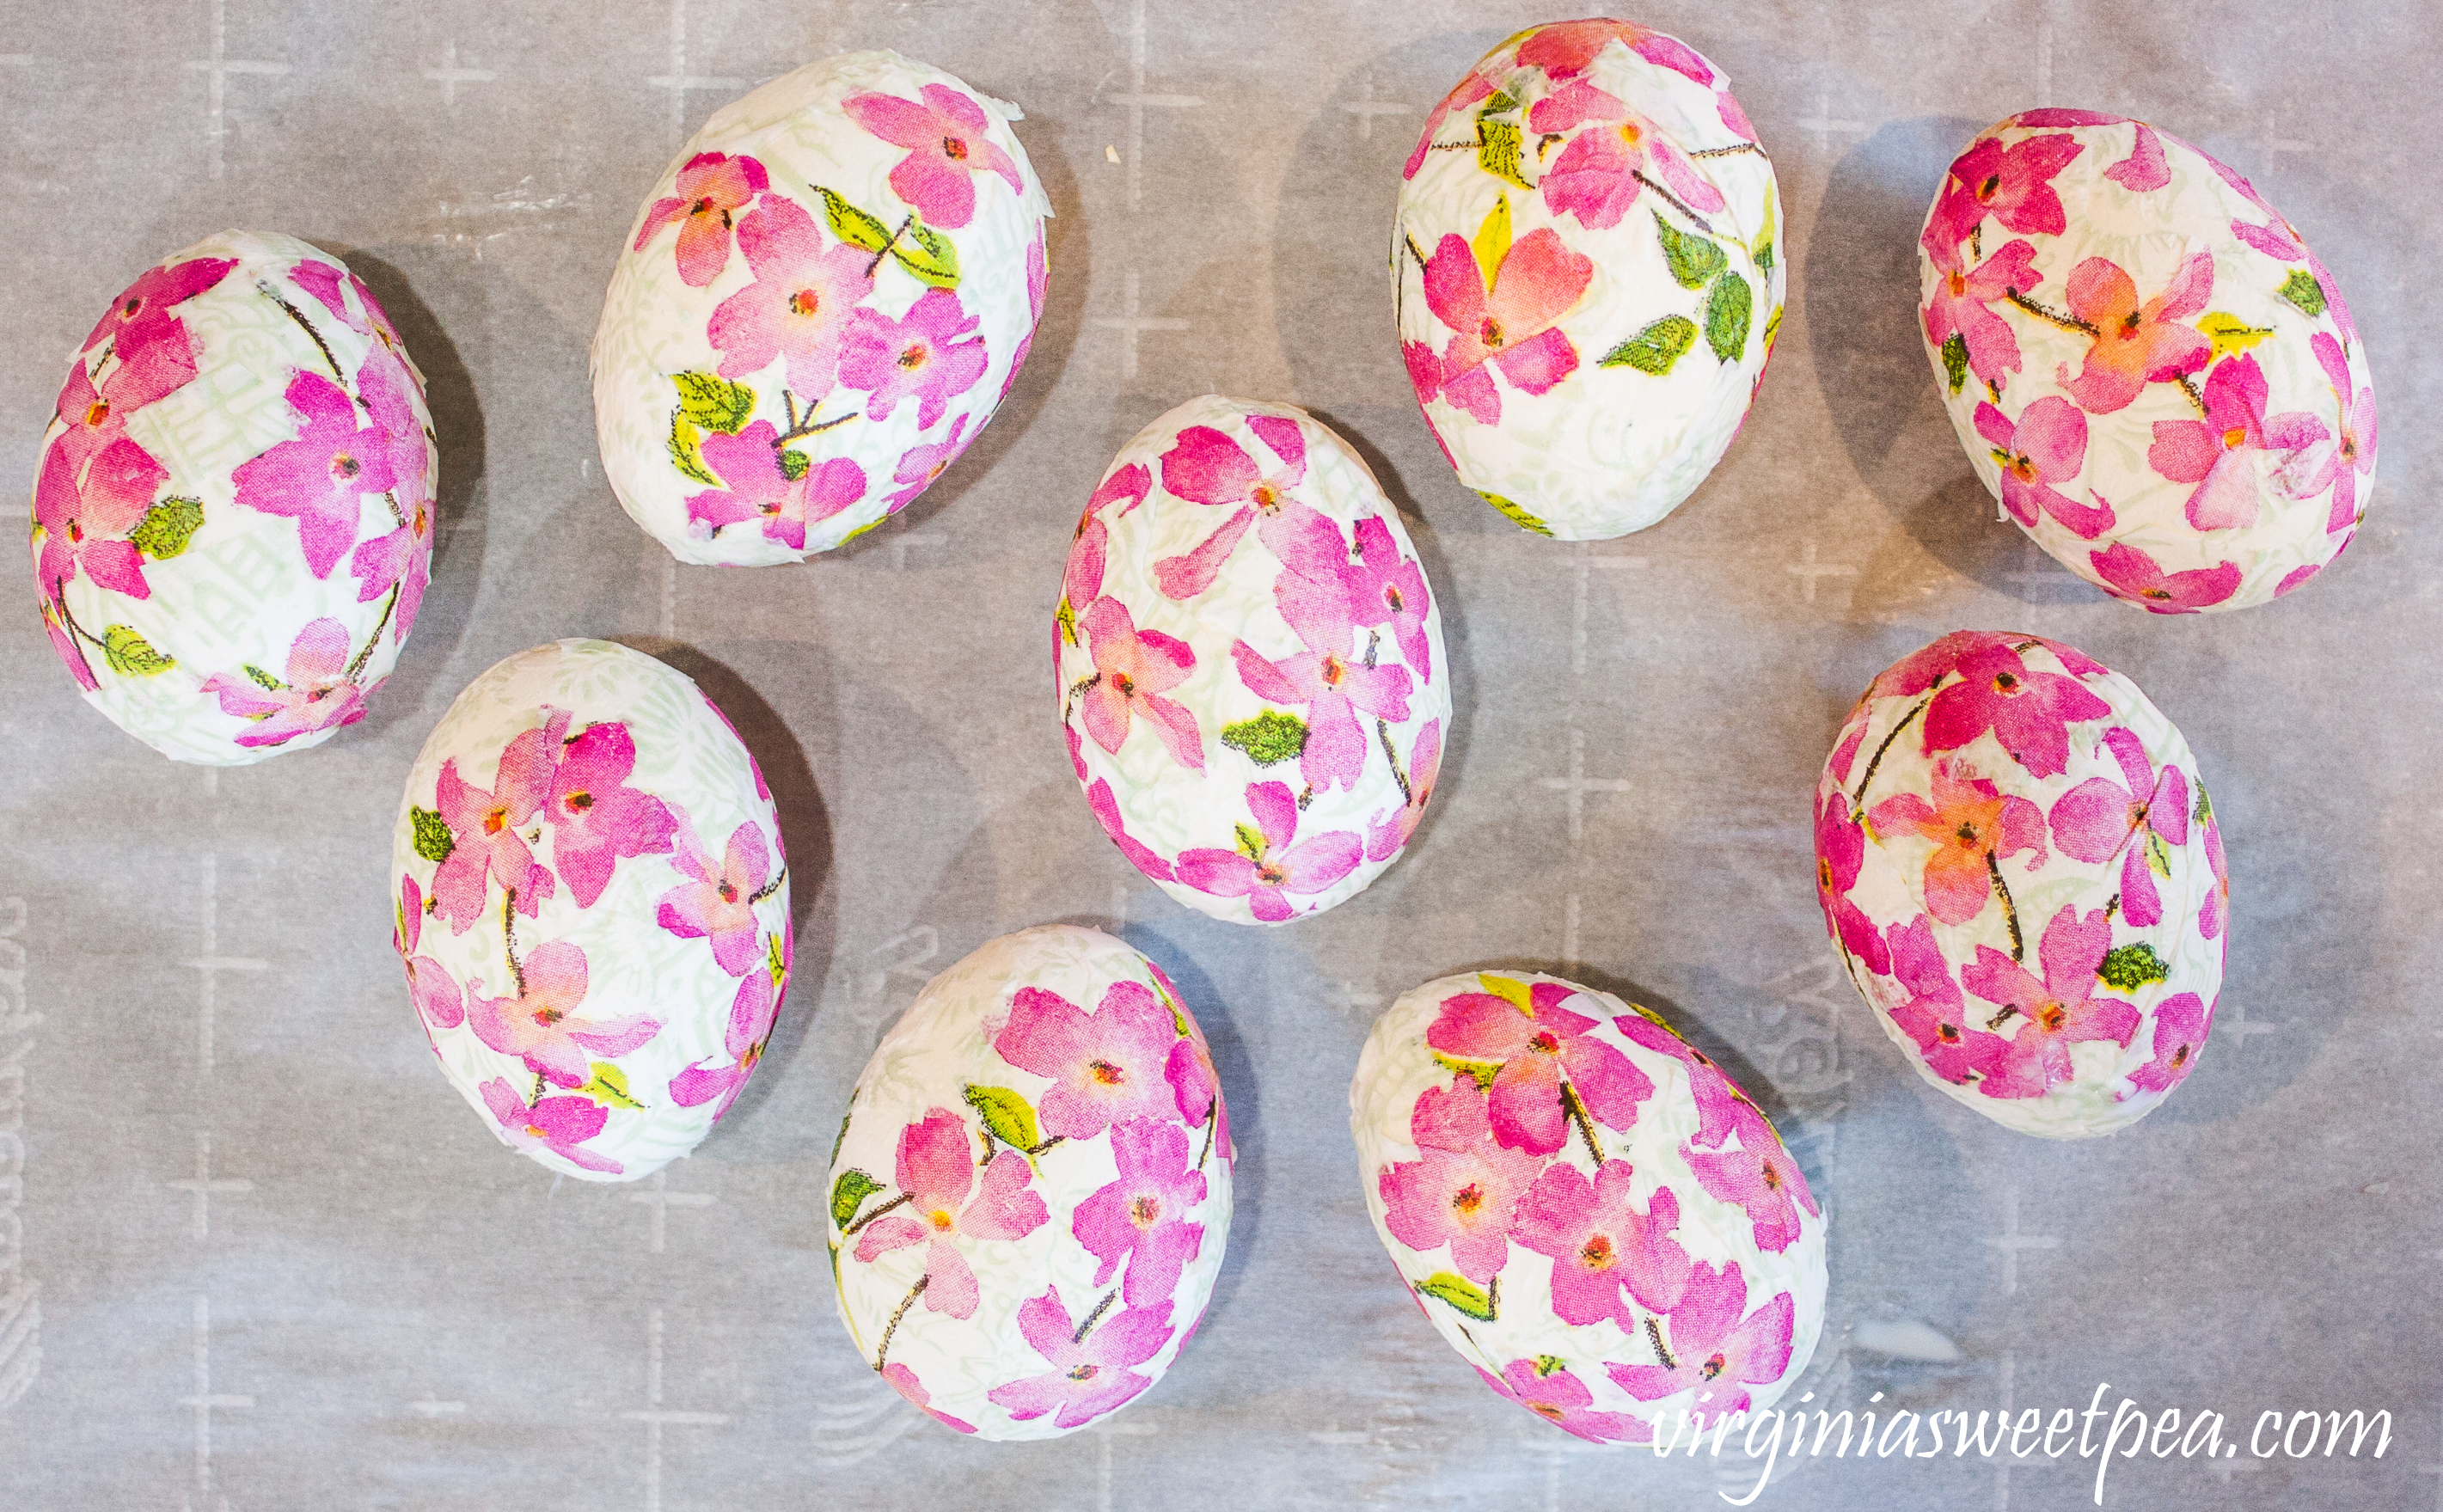 Easter eggs decoupaged with Caspari napkins